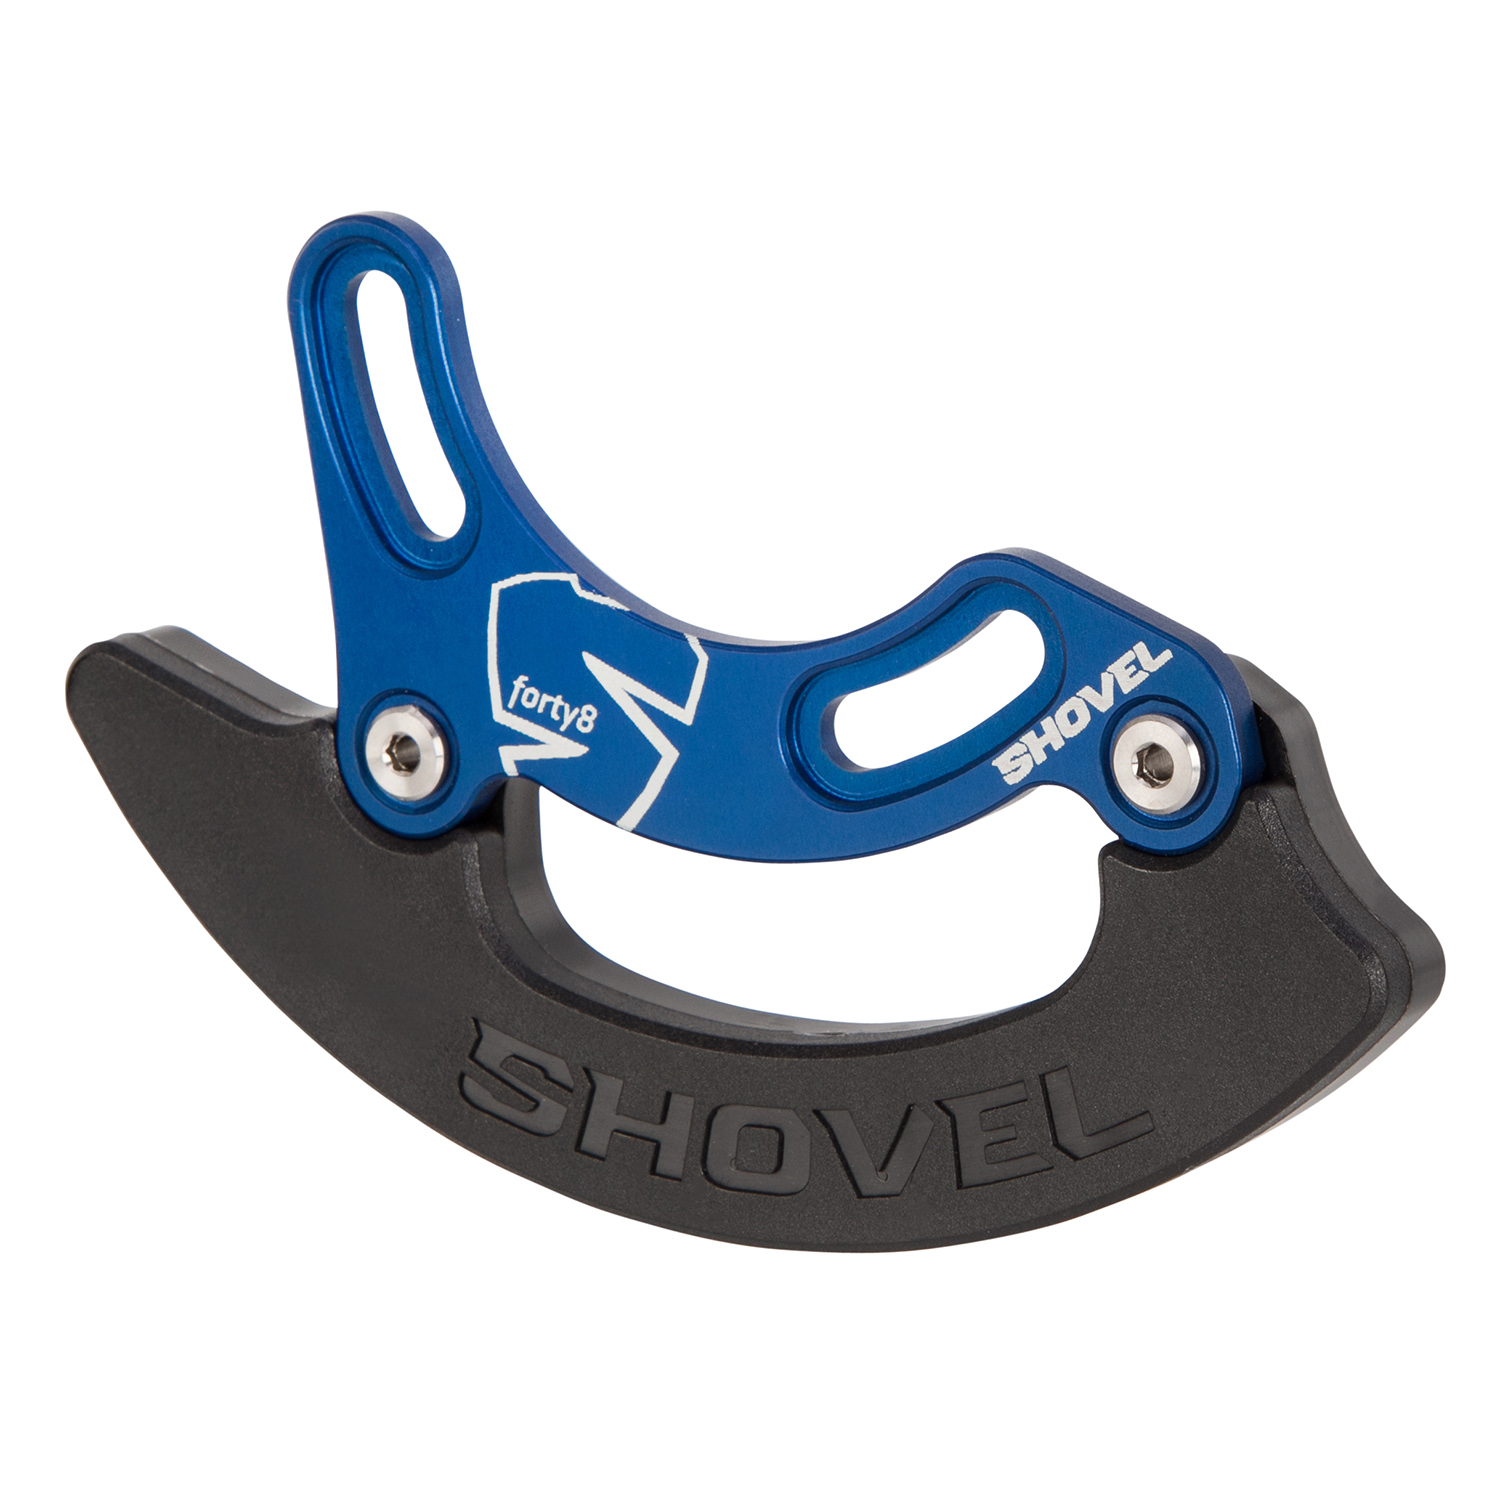 Shovel Cruna Catena Forty8 Blue, 26-34 Teeth, ISCG05